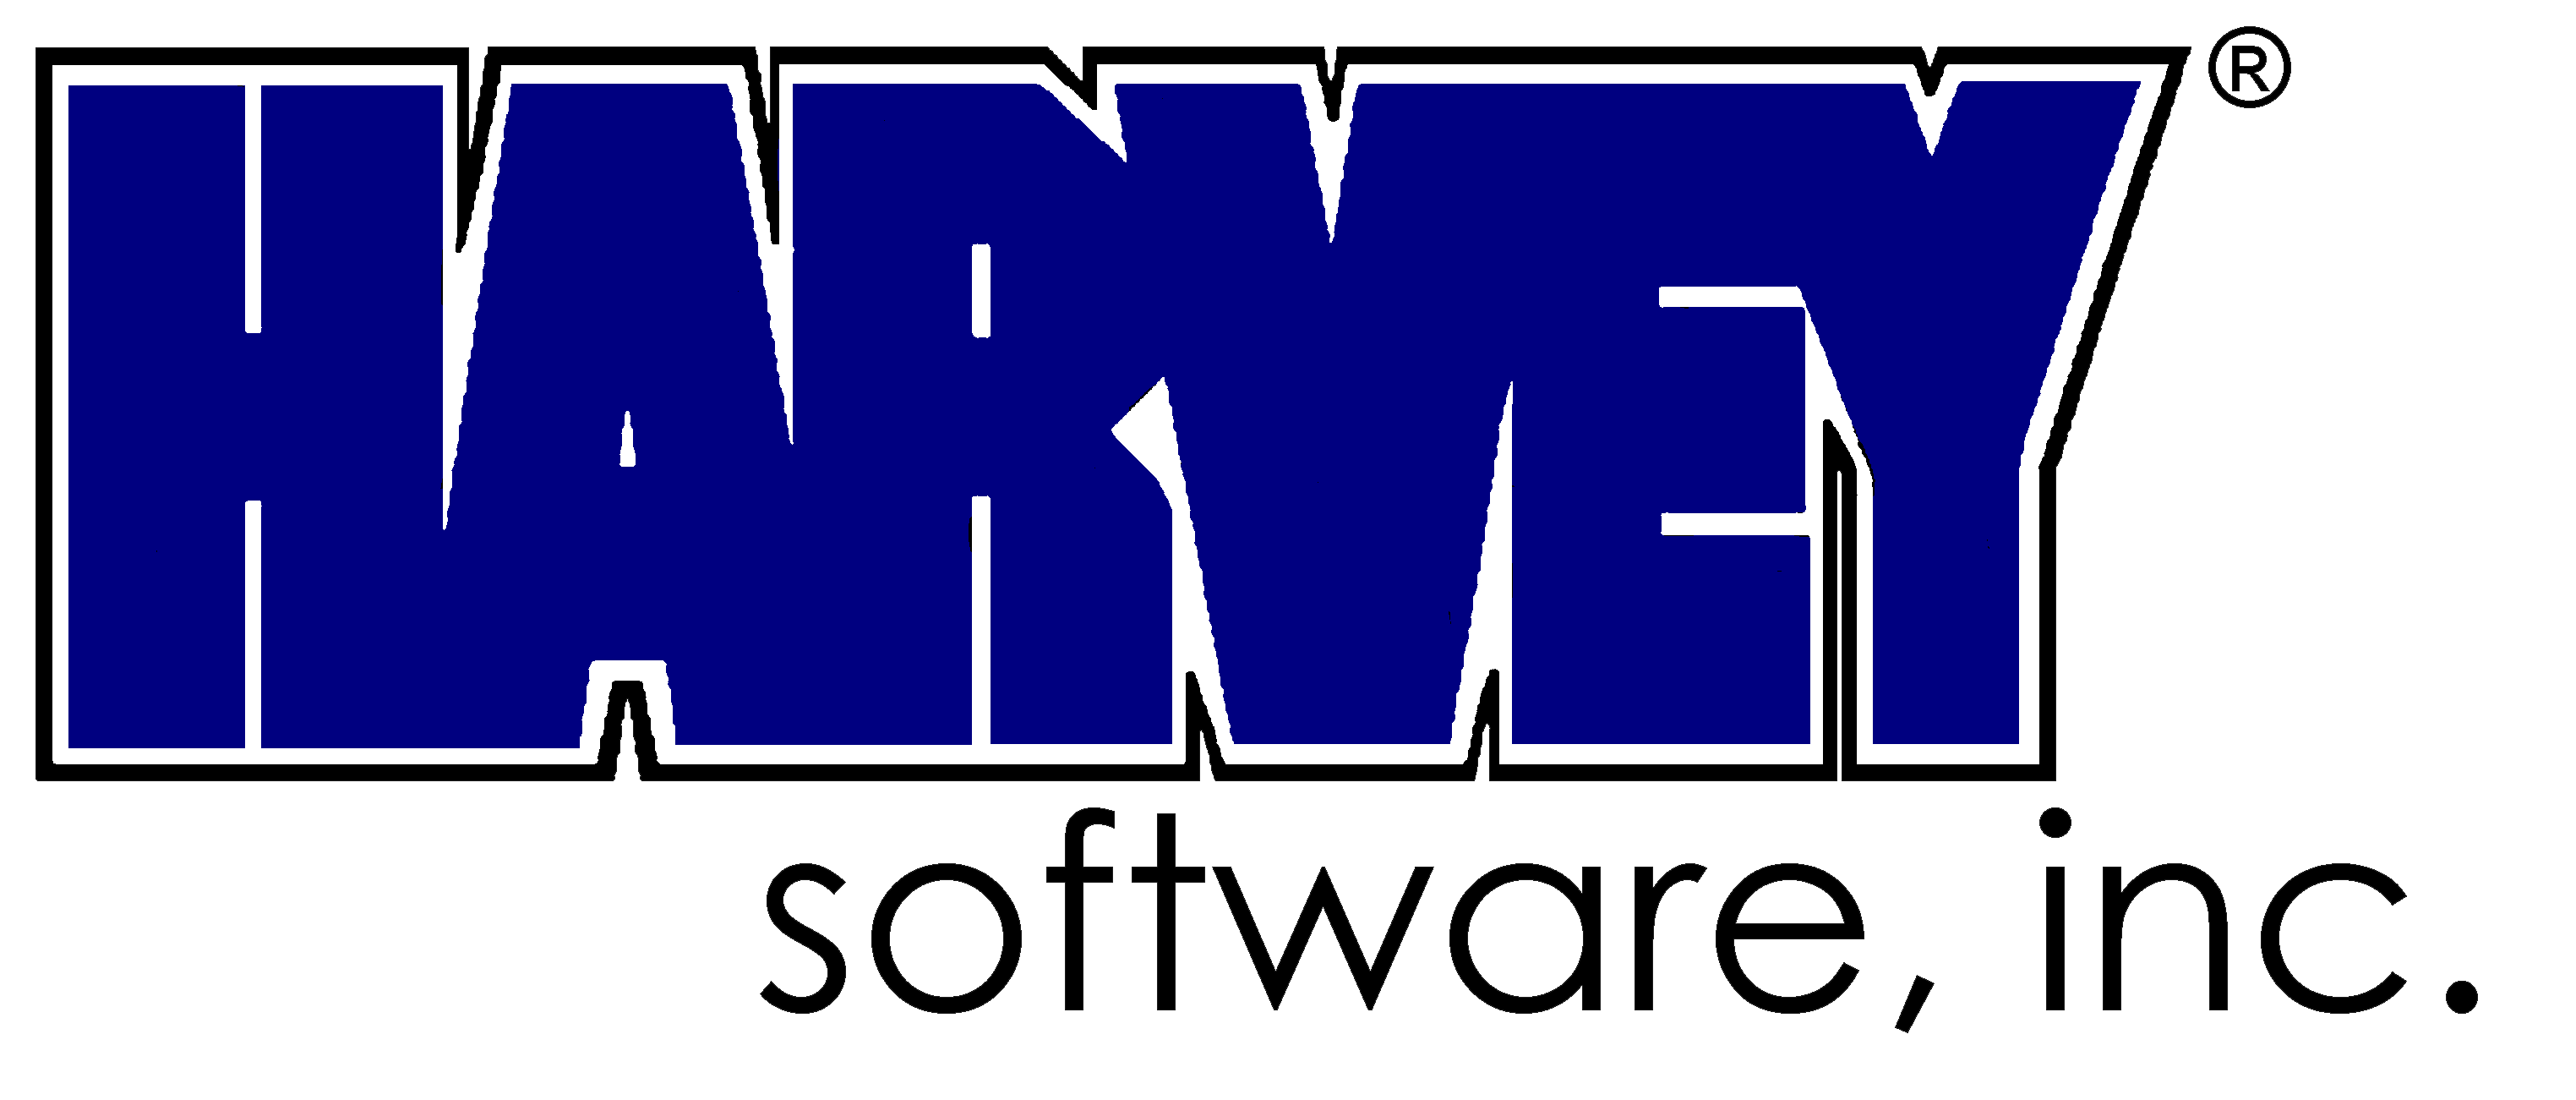 Brand Logo: Harvey Software